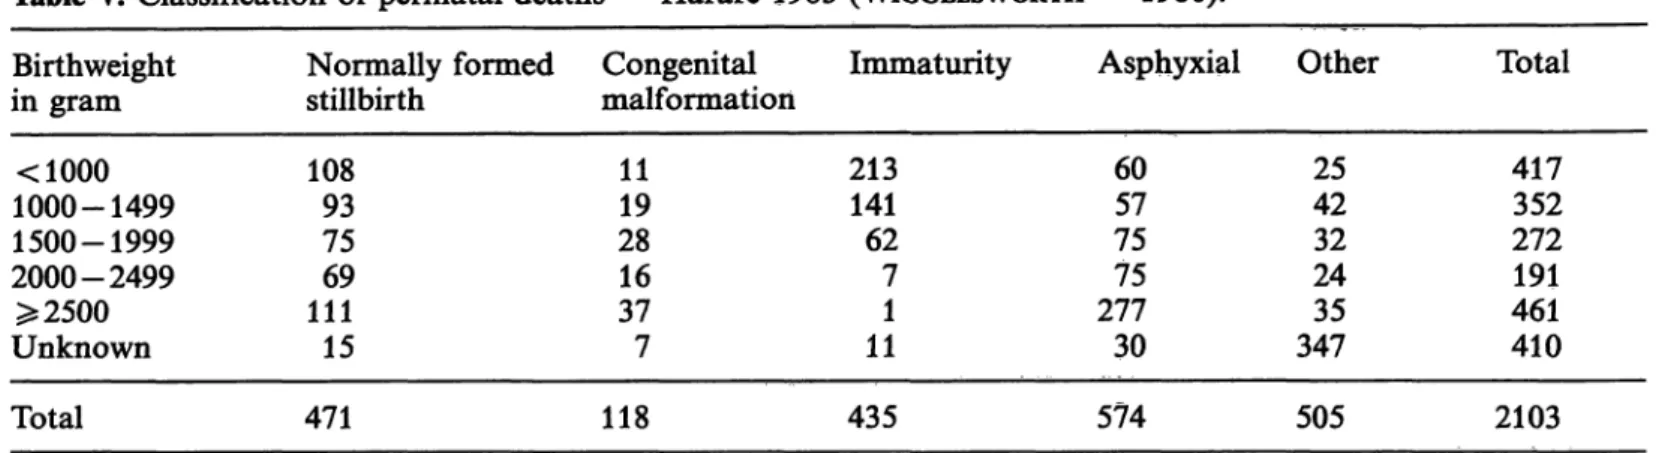 Table V. Classification of perinatal deaths - Harare 1983 (WIGGLESWORTH - 1980). Birthweight in gram &lt;1000 1000-1499 1500-1999 2000-2499 $52500 Unknown Normally formedstillbirth10893756911115 Congenital malformation11192816377 Immaturity213141627111 Asp